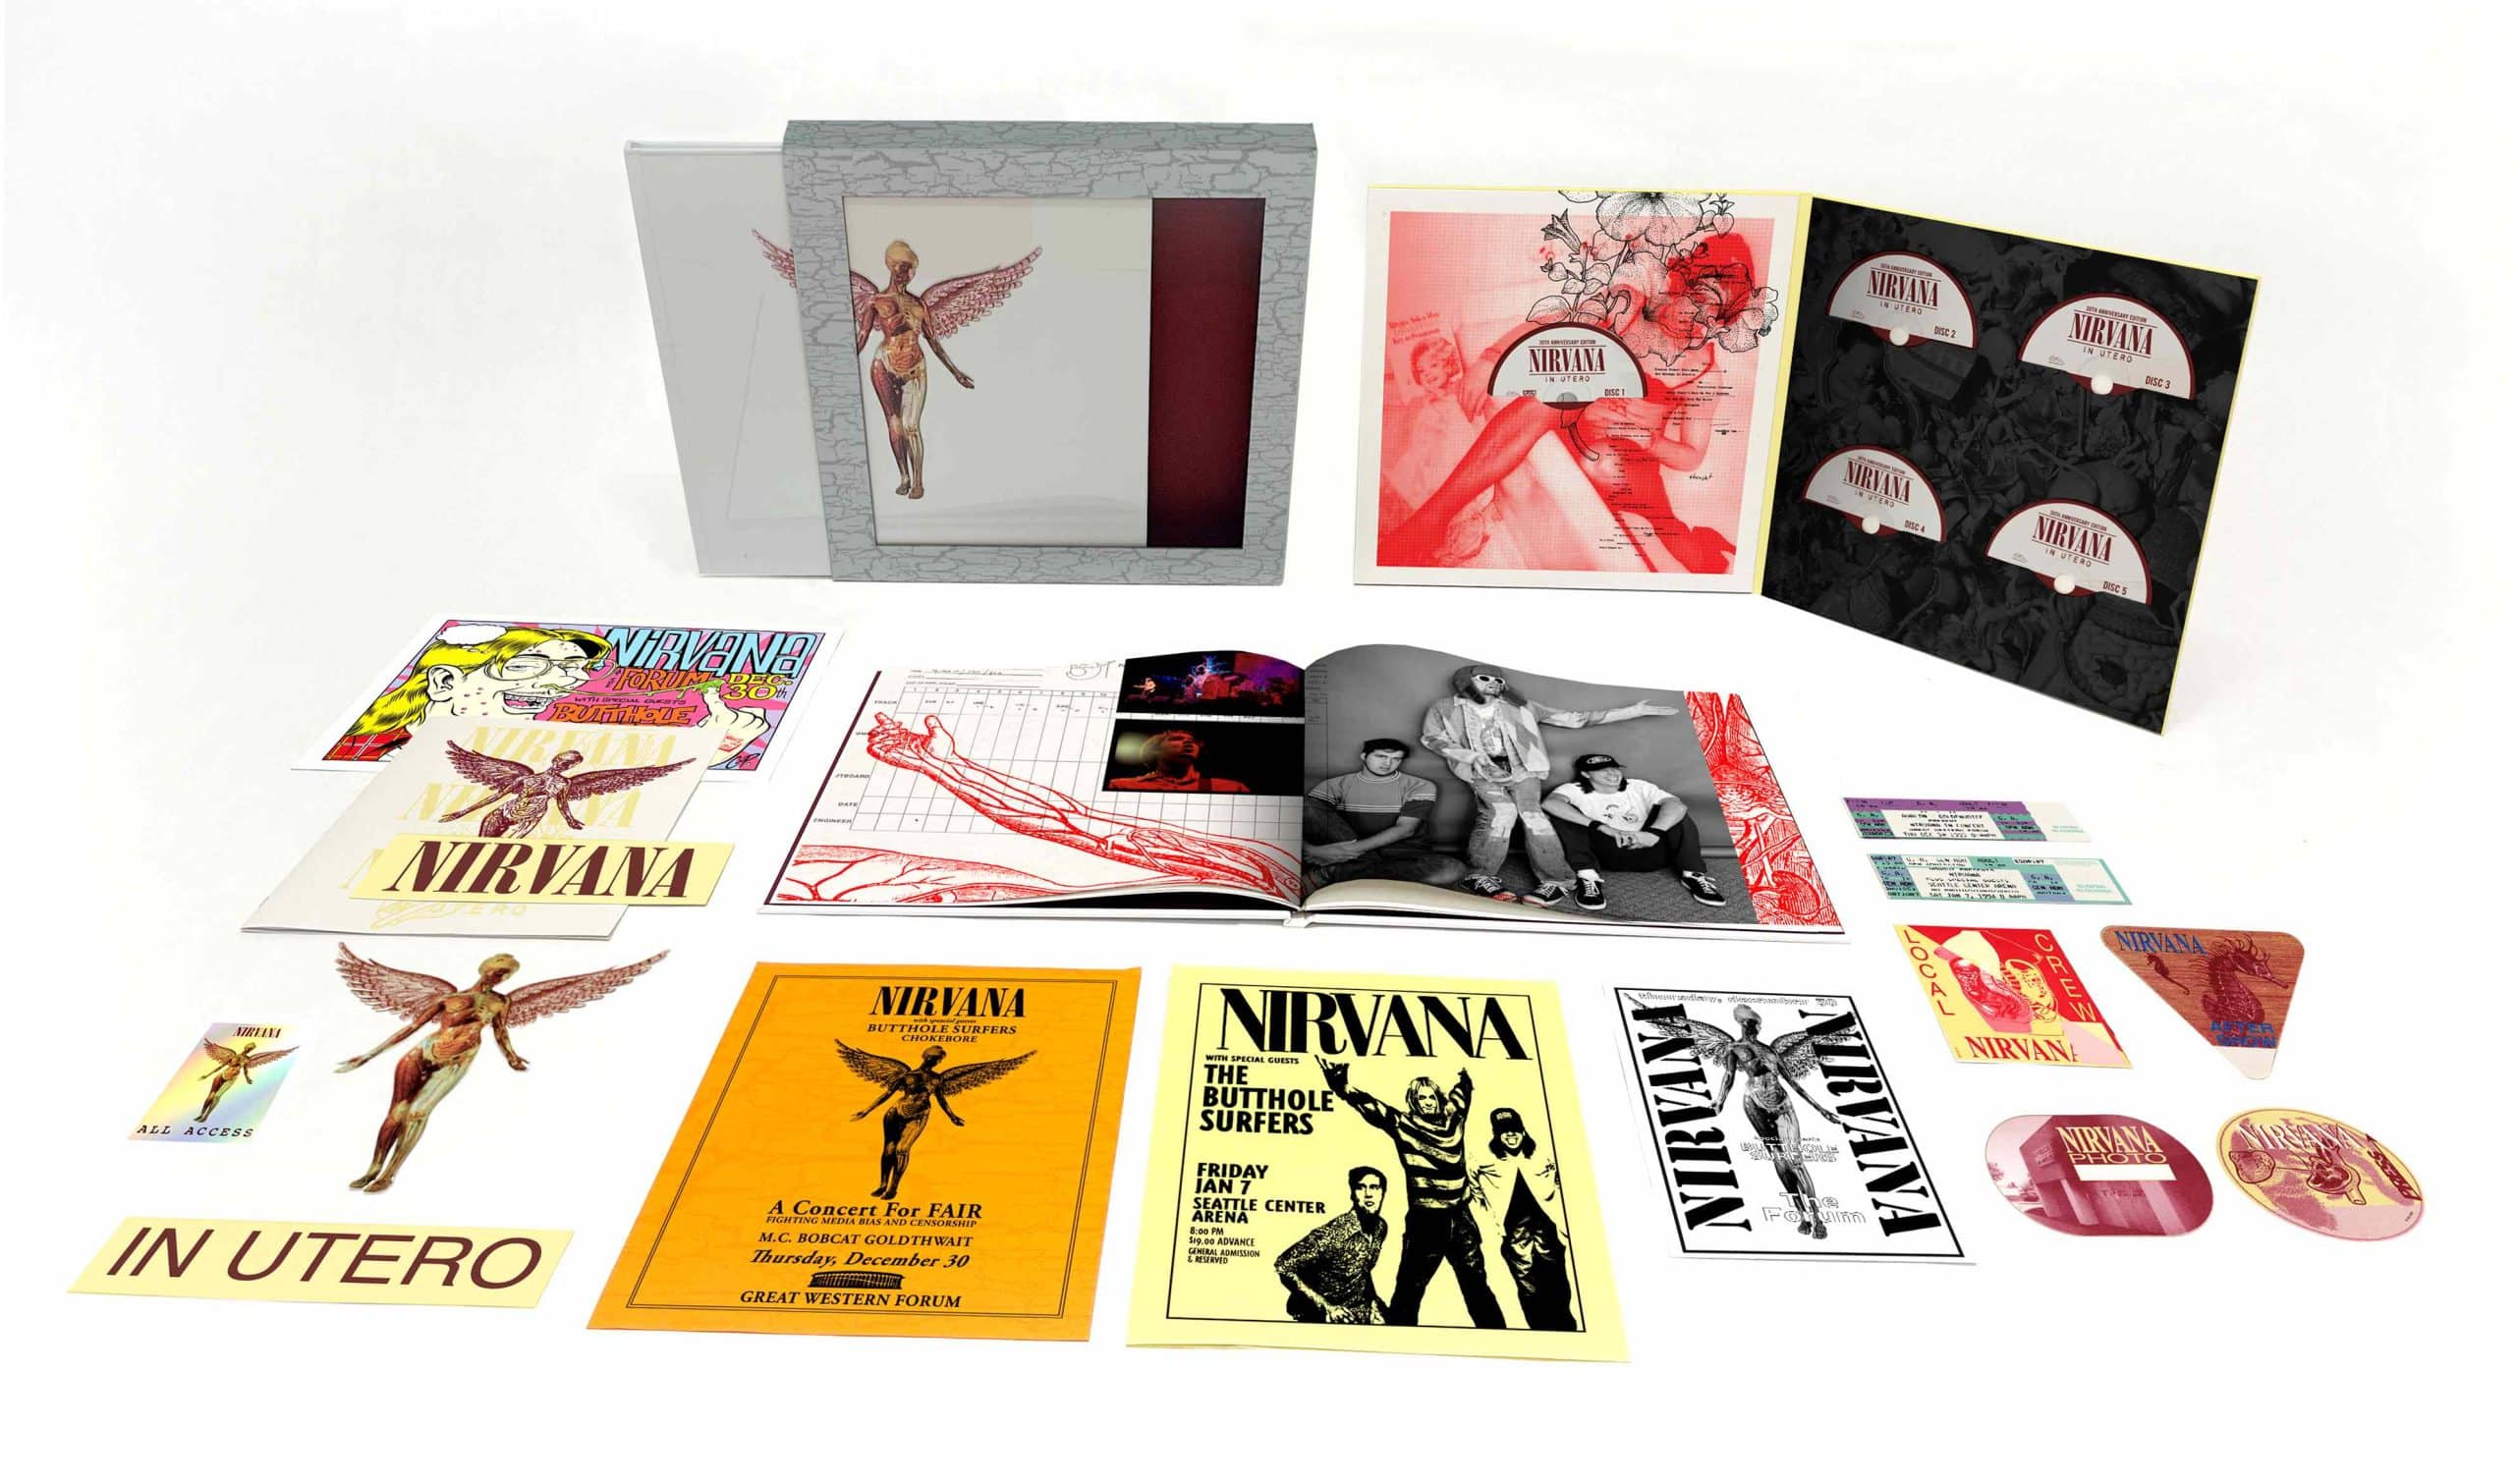 Nirvana-In-Utero-5CD-Product-Shot.jpg